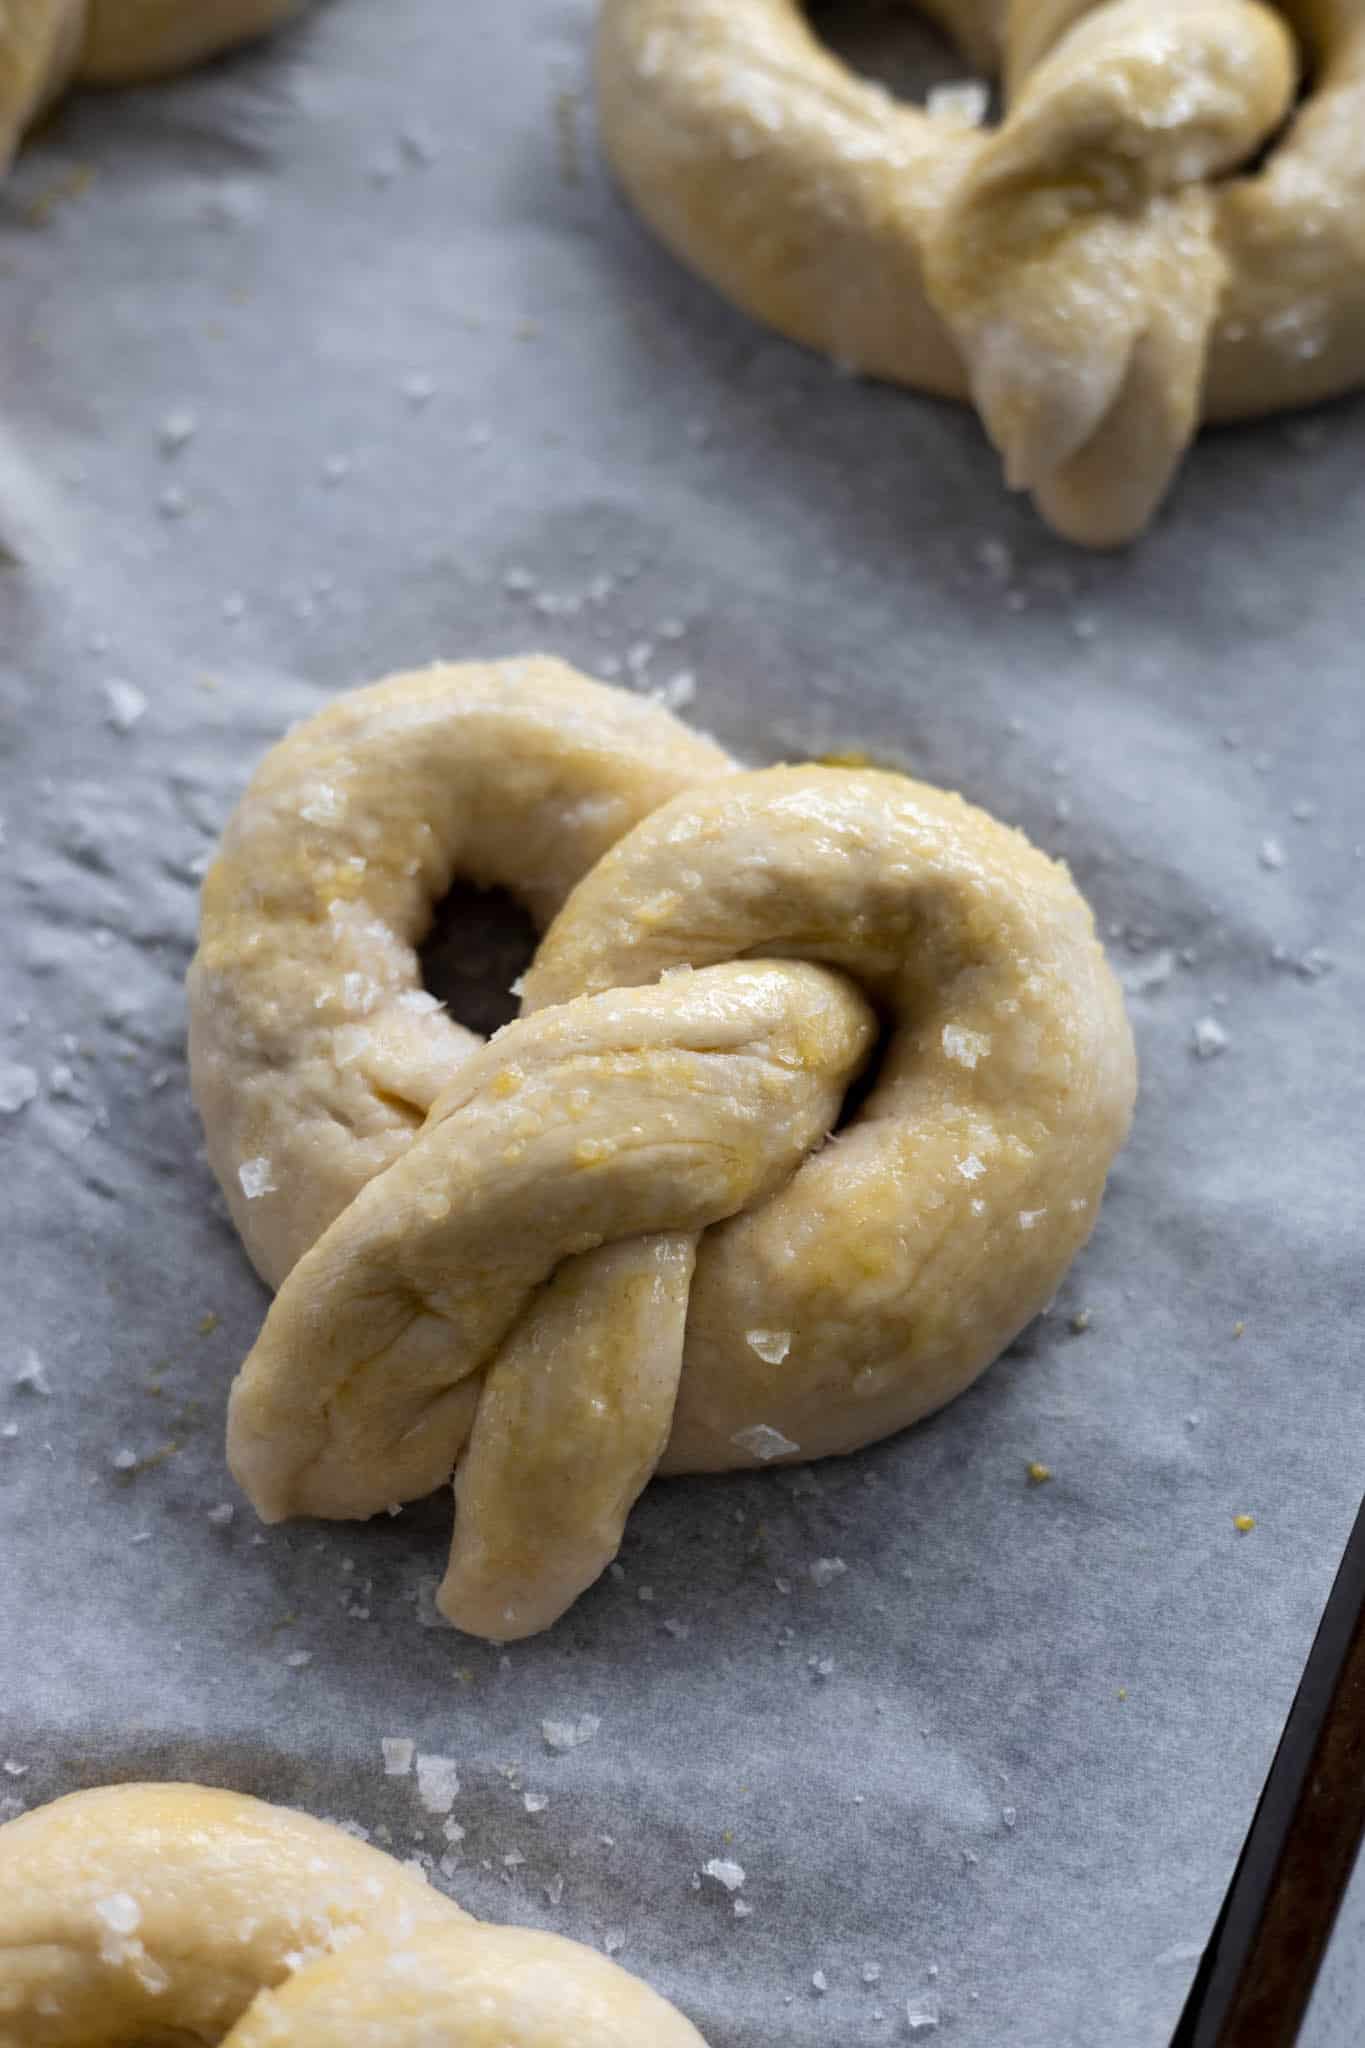 Uncooked pretzels with egg wash and sea salt.